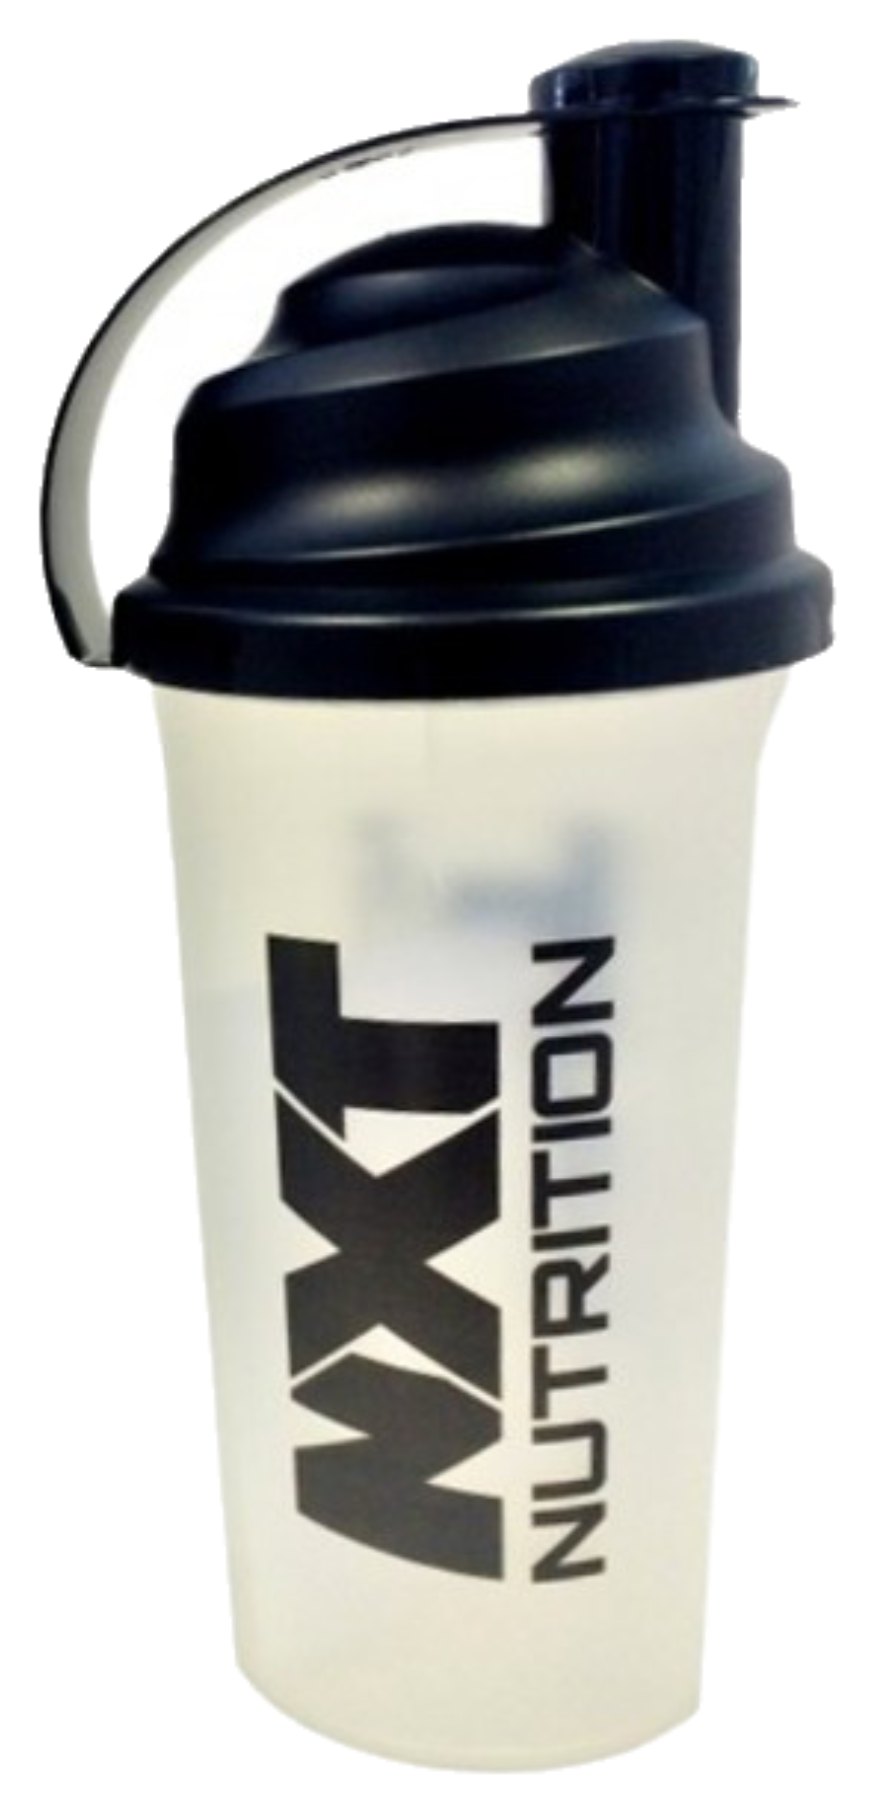 NXT Nutrition Shaker 750g